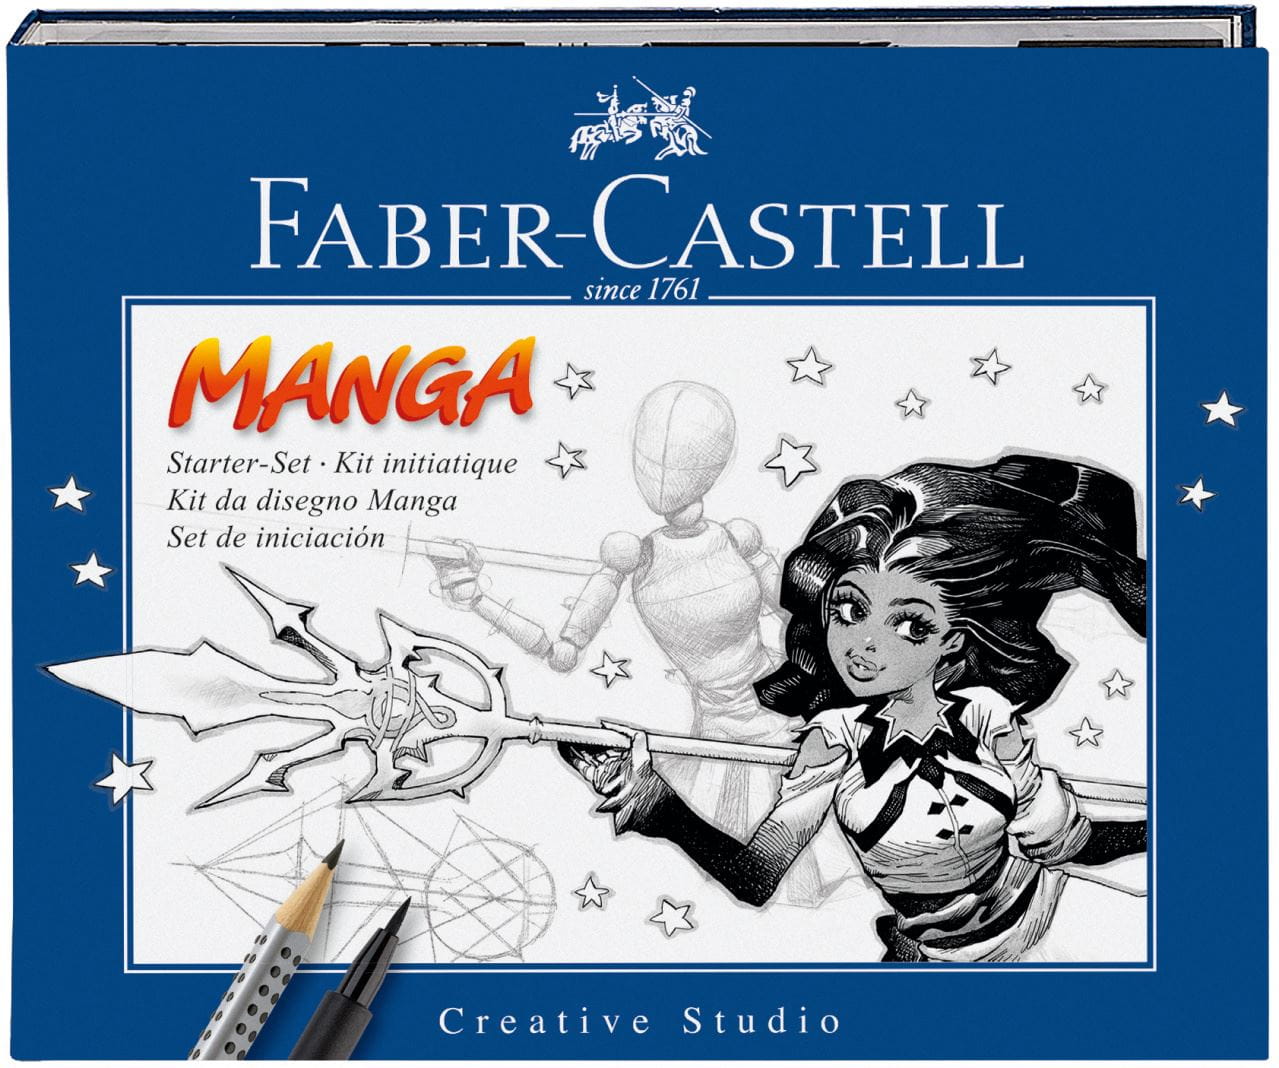 Faber-Castell - Feutre Pitt Artist Pen, Manga kit pour apprendre